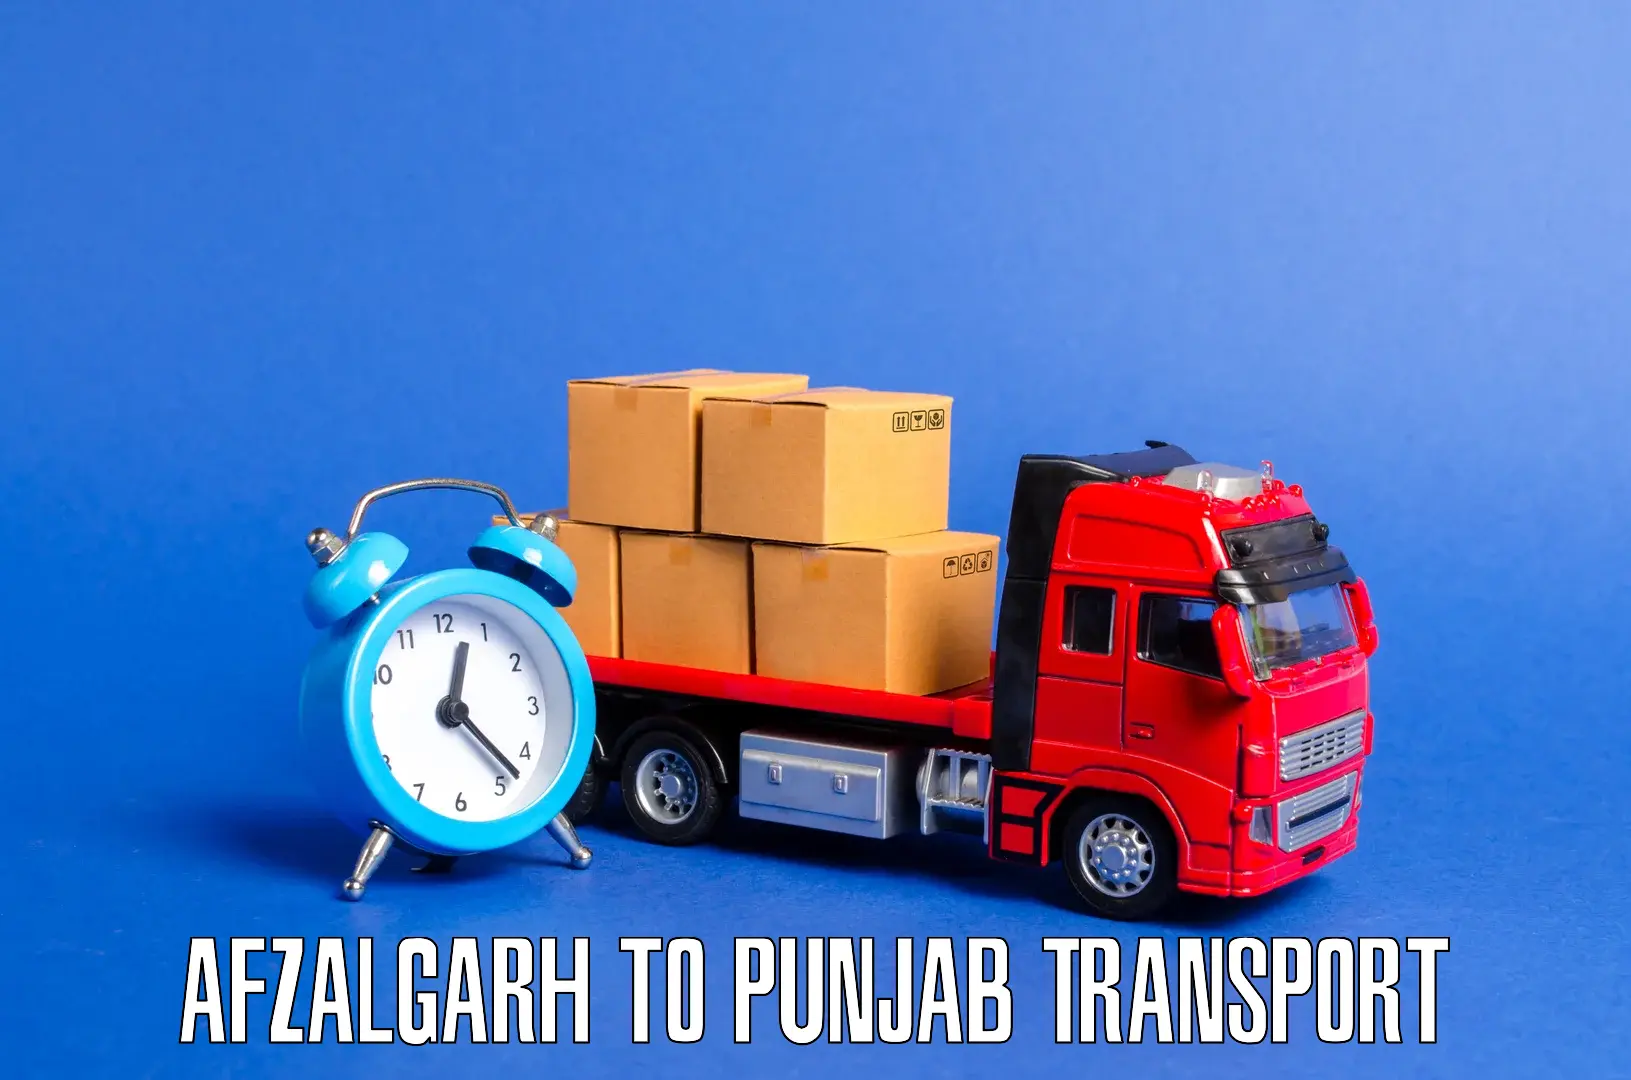 Online transport service Afzalgarh to Jalandhar